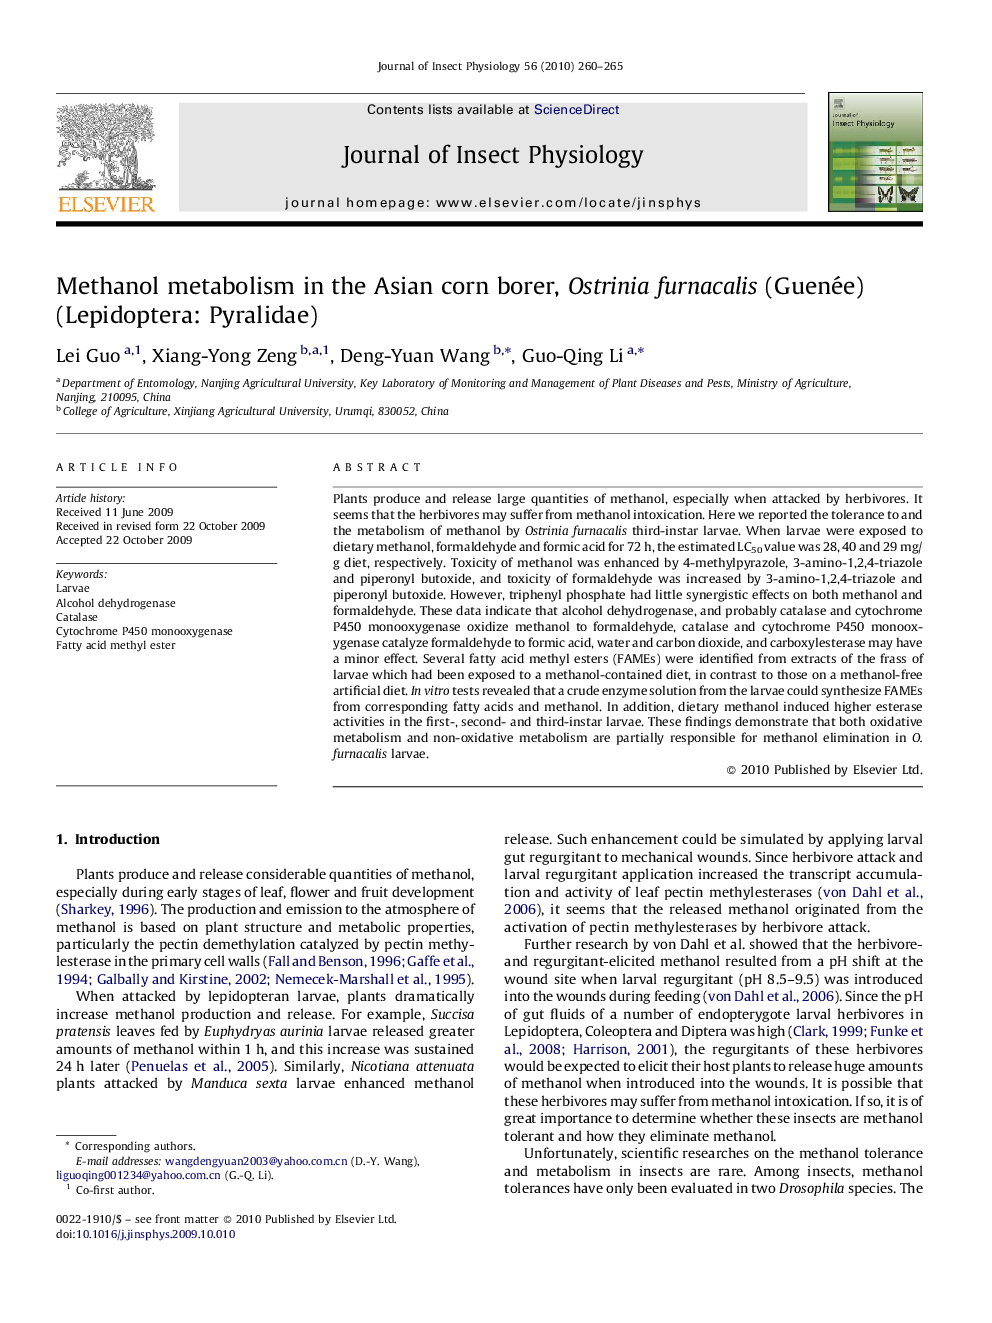 Methanol metabolism in the Asian corn borer, Ostrinia furnacalis (Guenée) (Lepidoptera: Pyralidae)